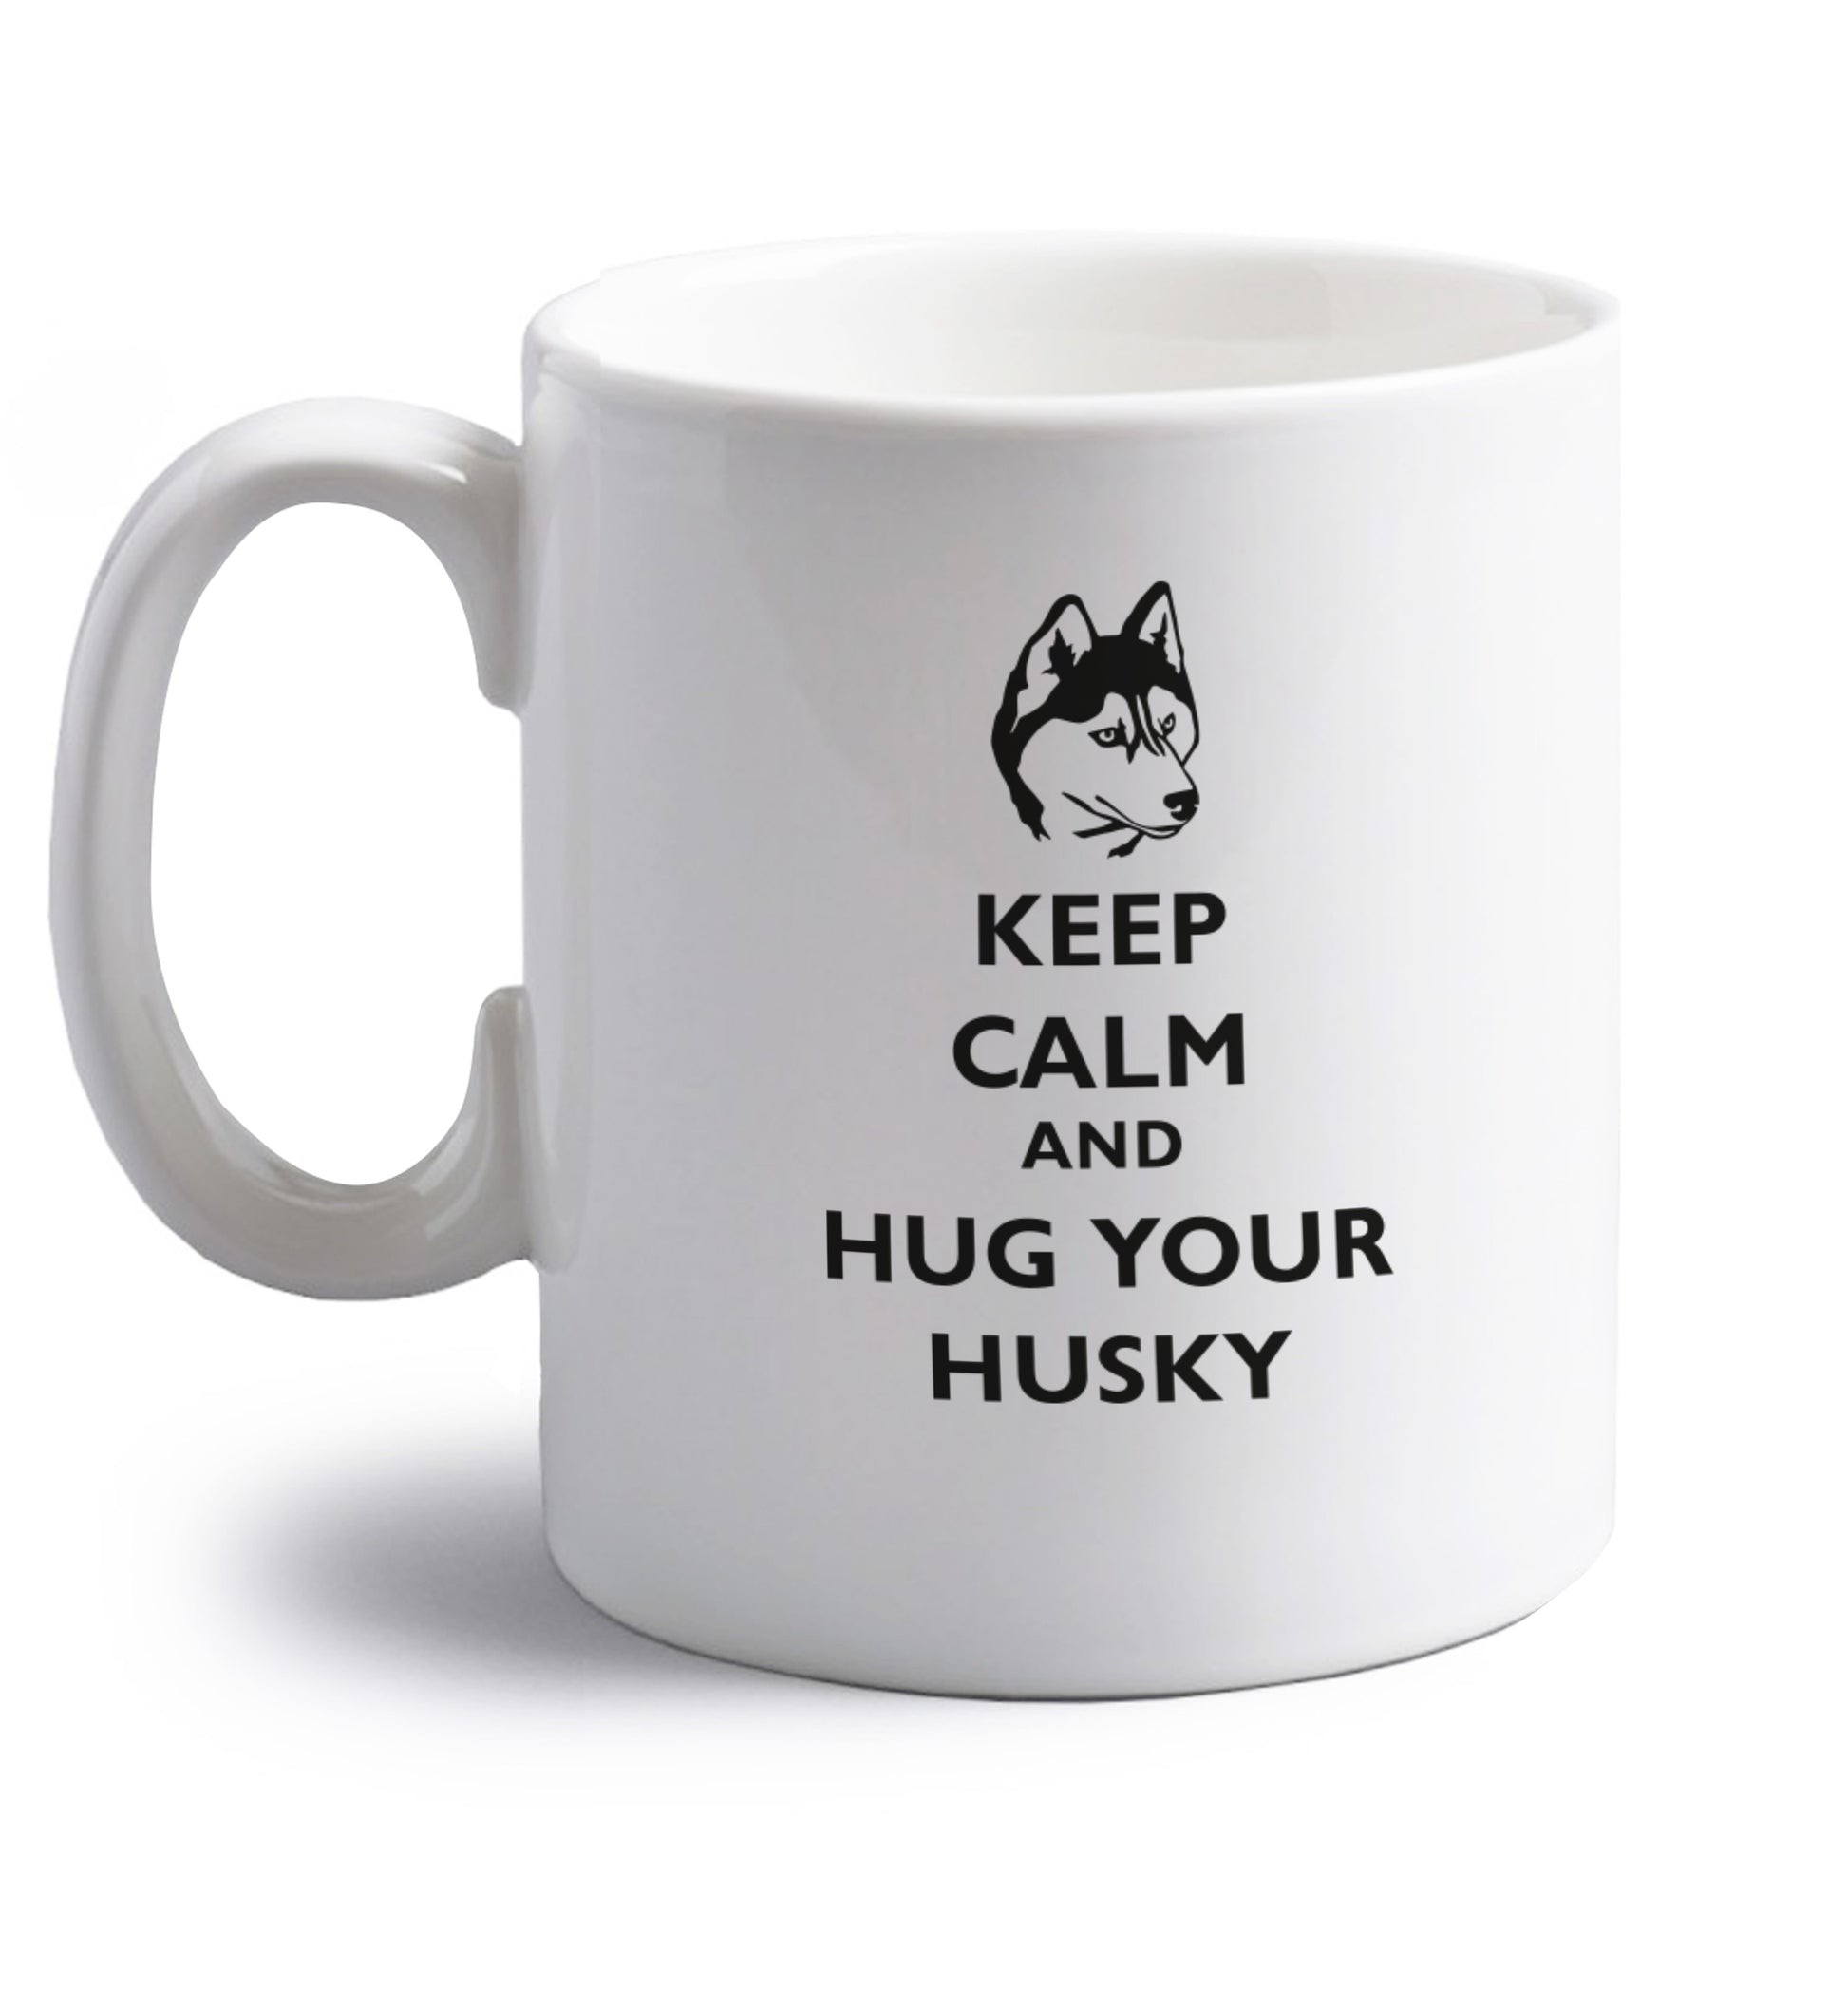 Keep calm and hug your husky right handed white ceramic mug 